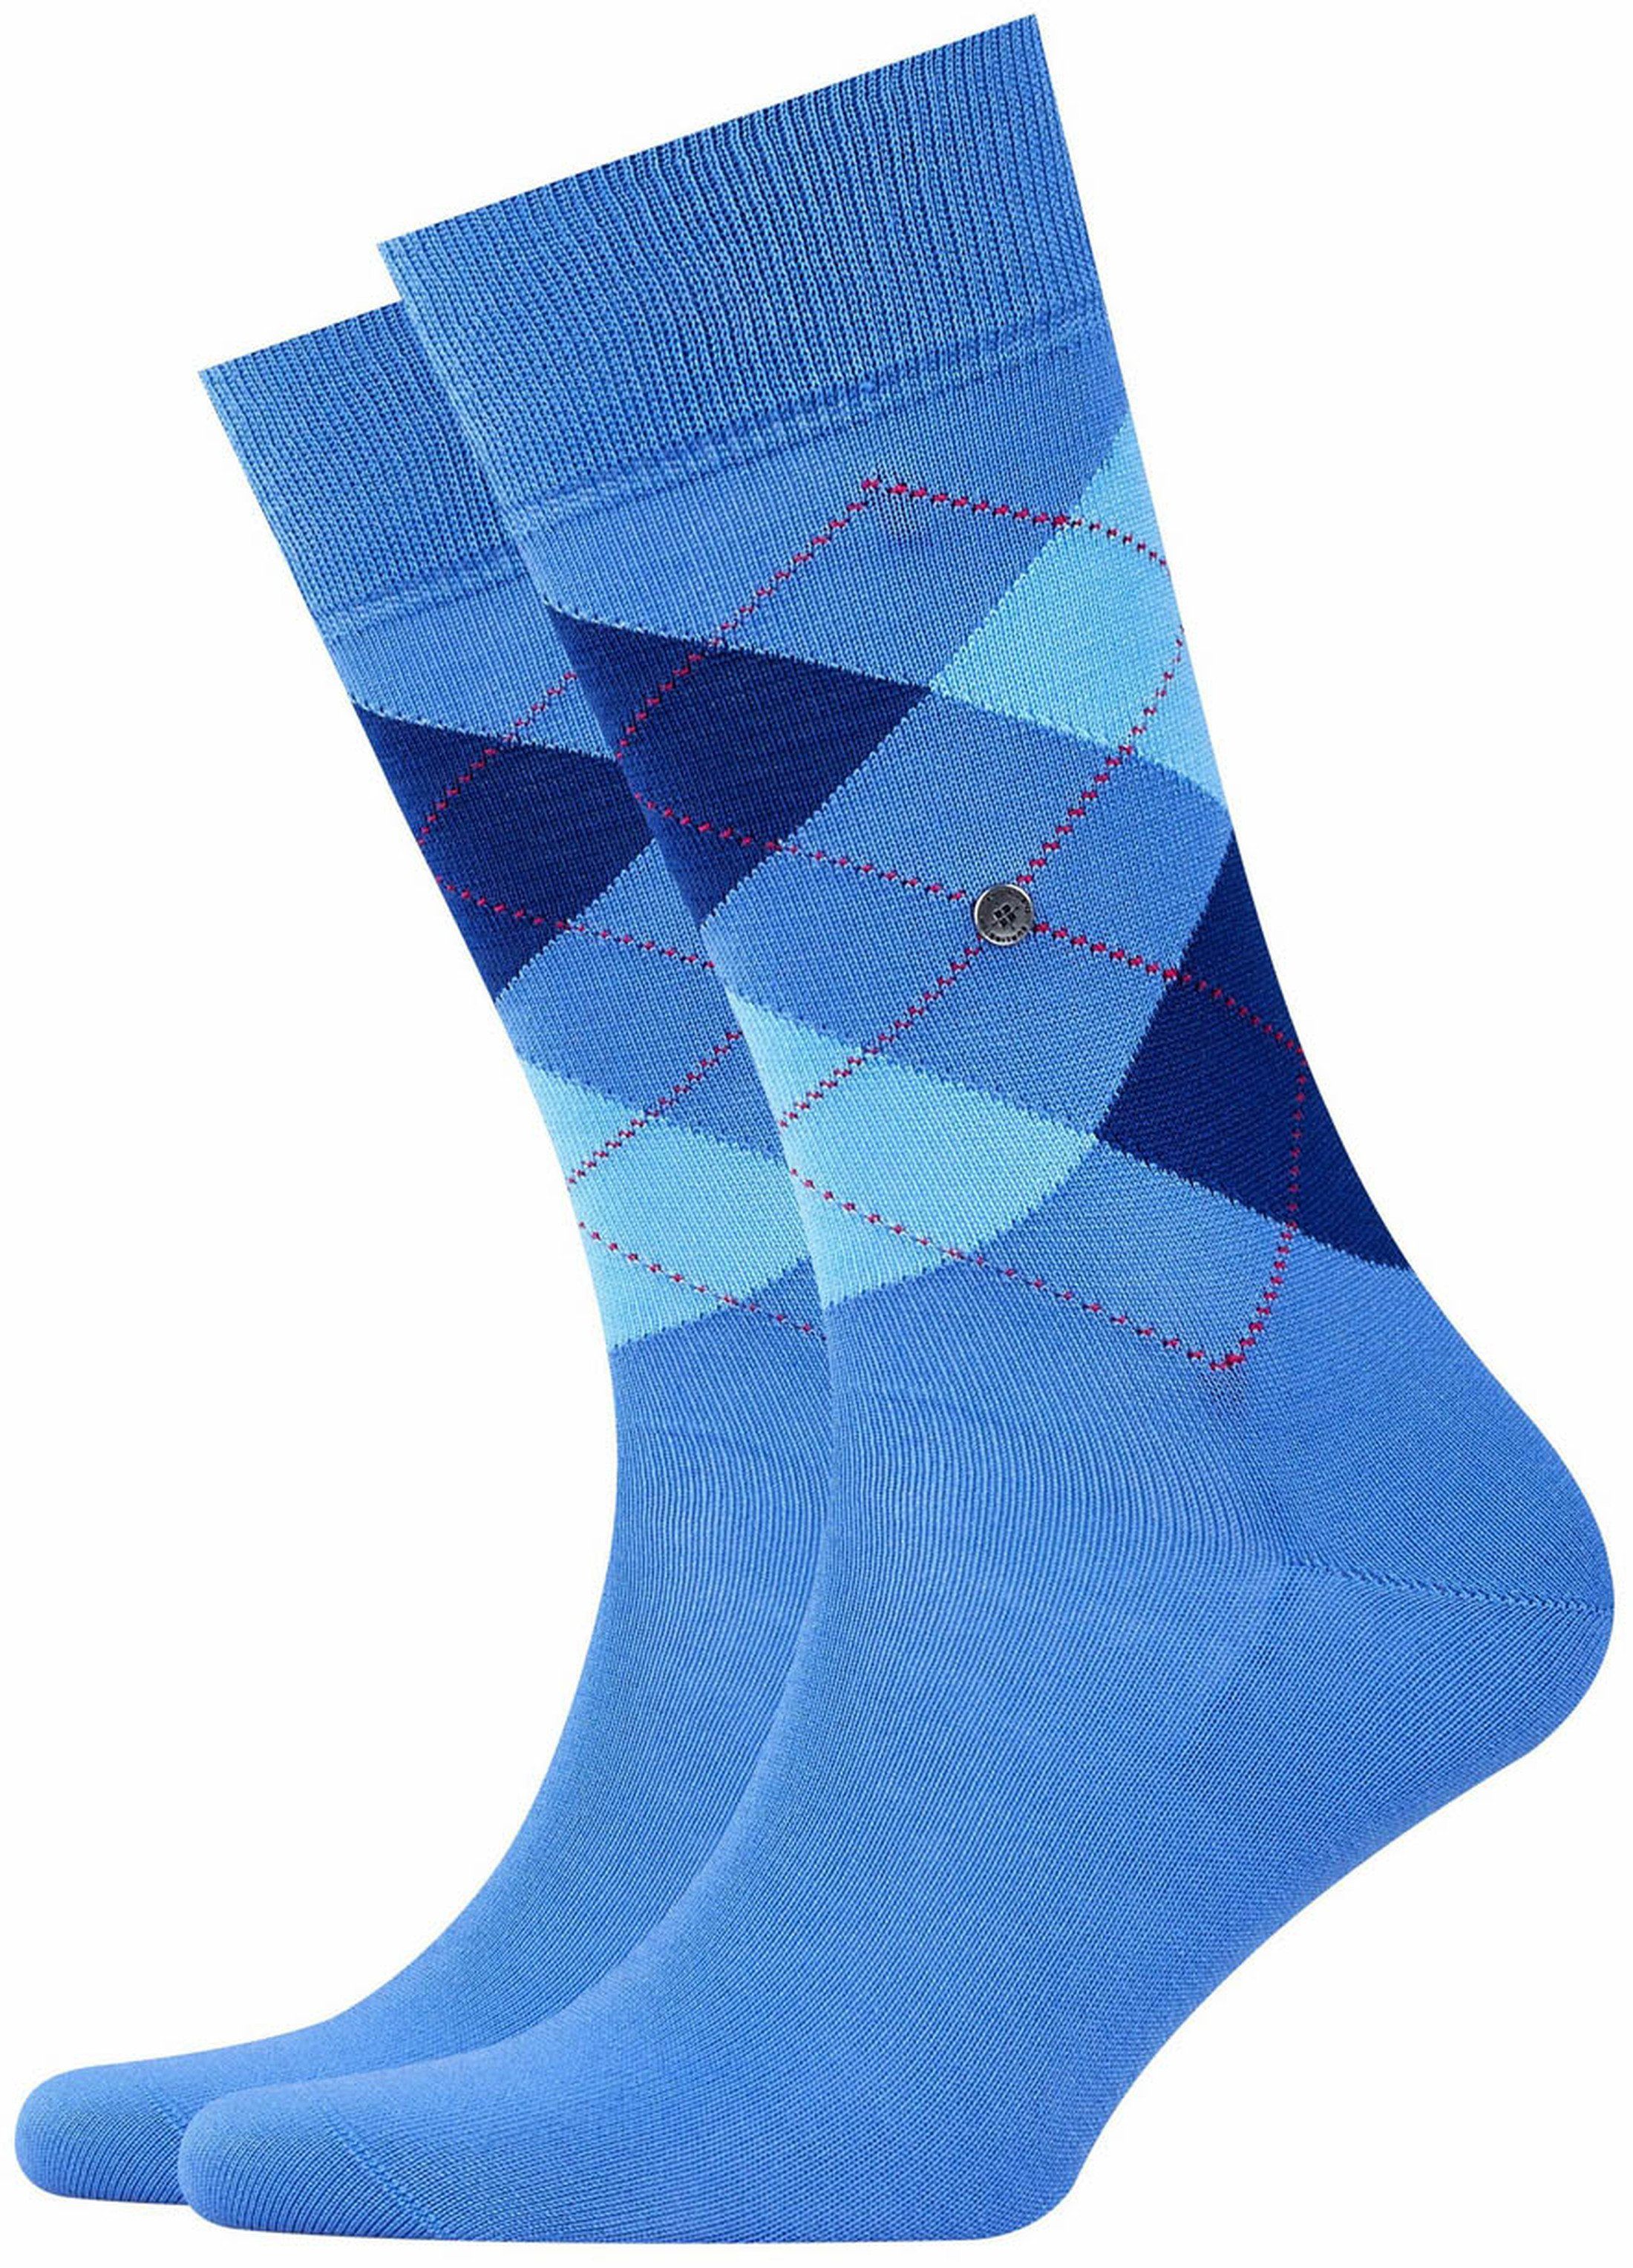 Burlington Socks Manchester 6550 Blue size 40-46